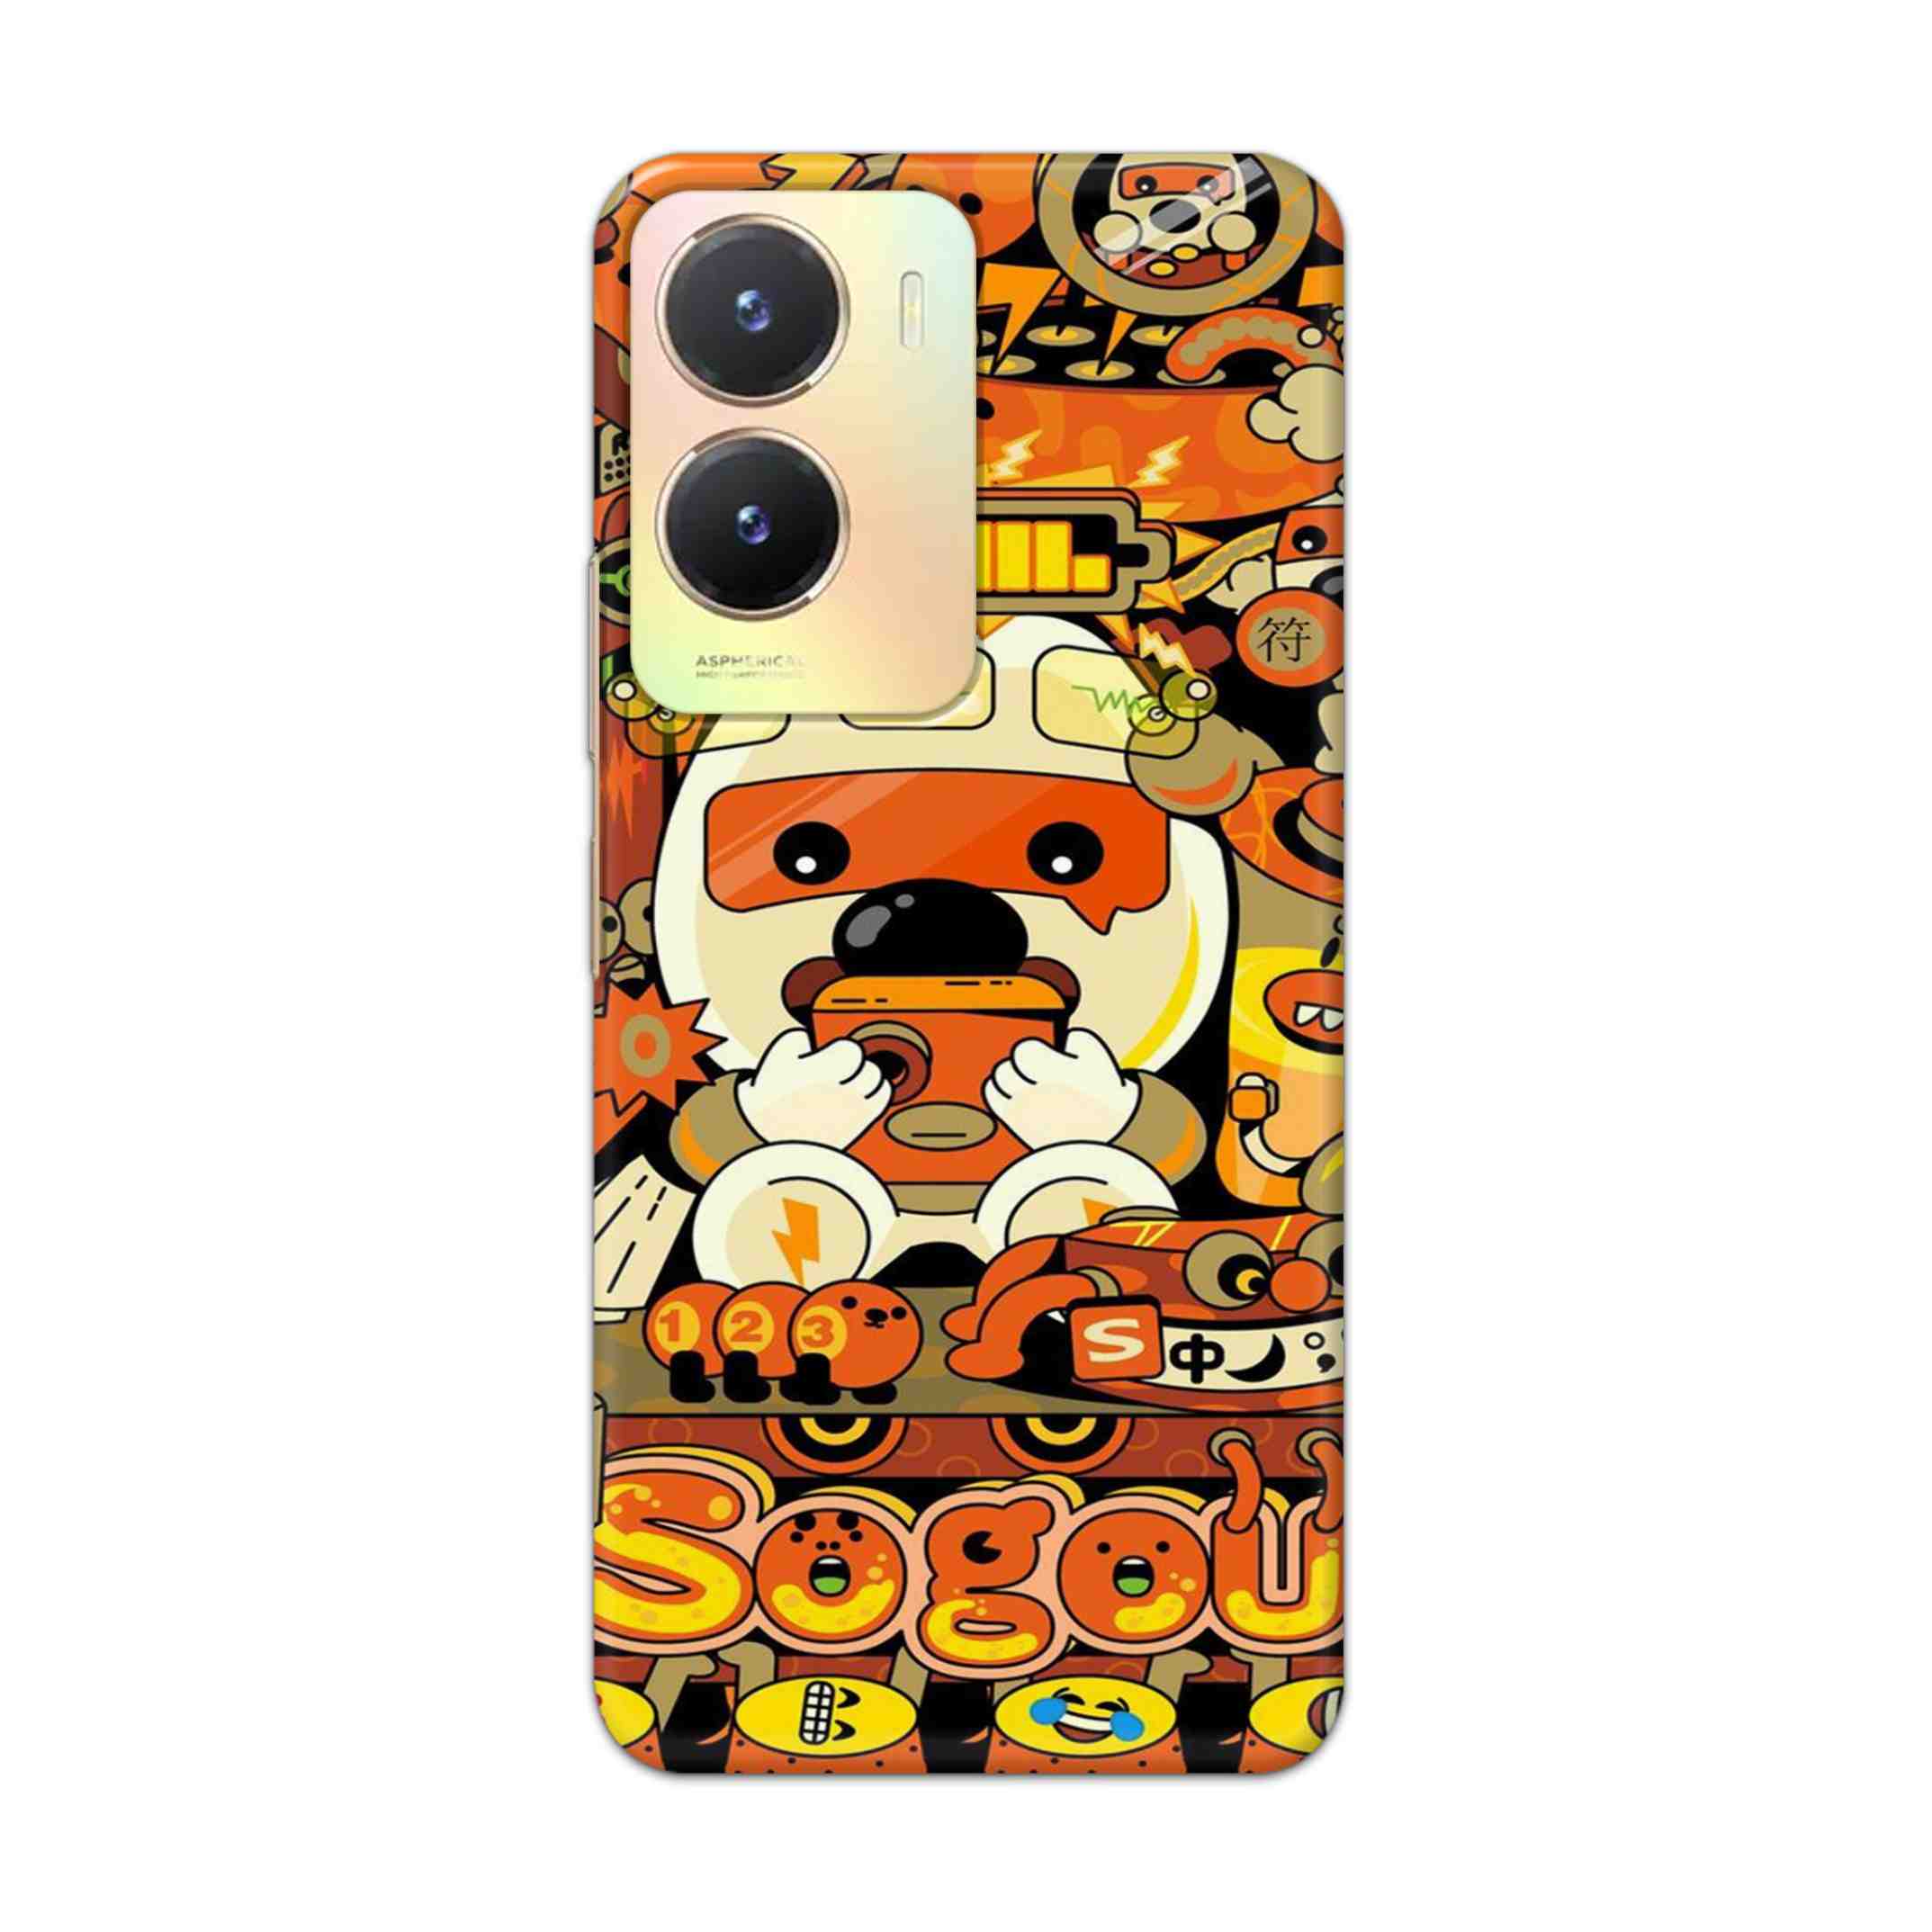 Buy Sogou Hard Back Mobile Phone Case Cover For Vivo T2x Online